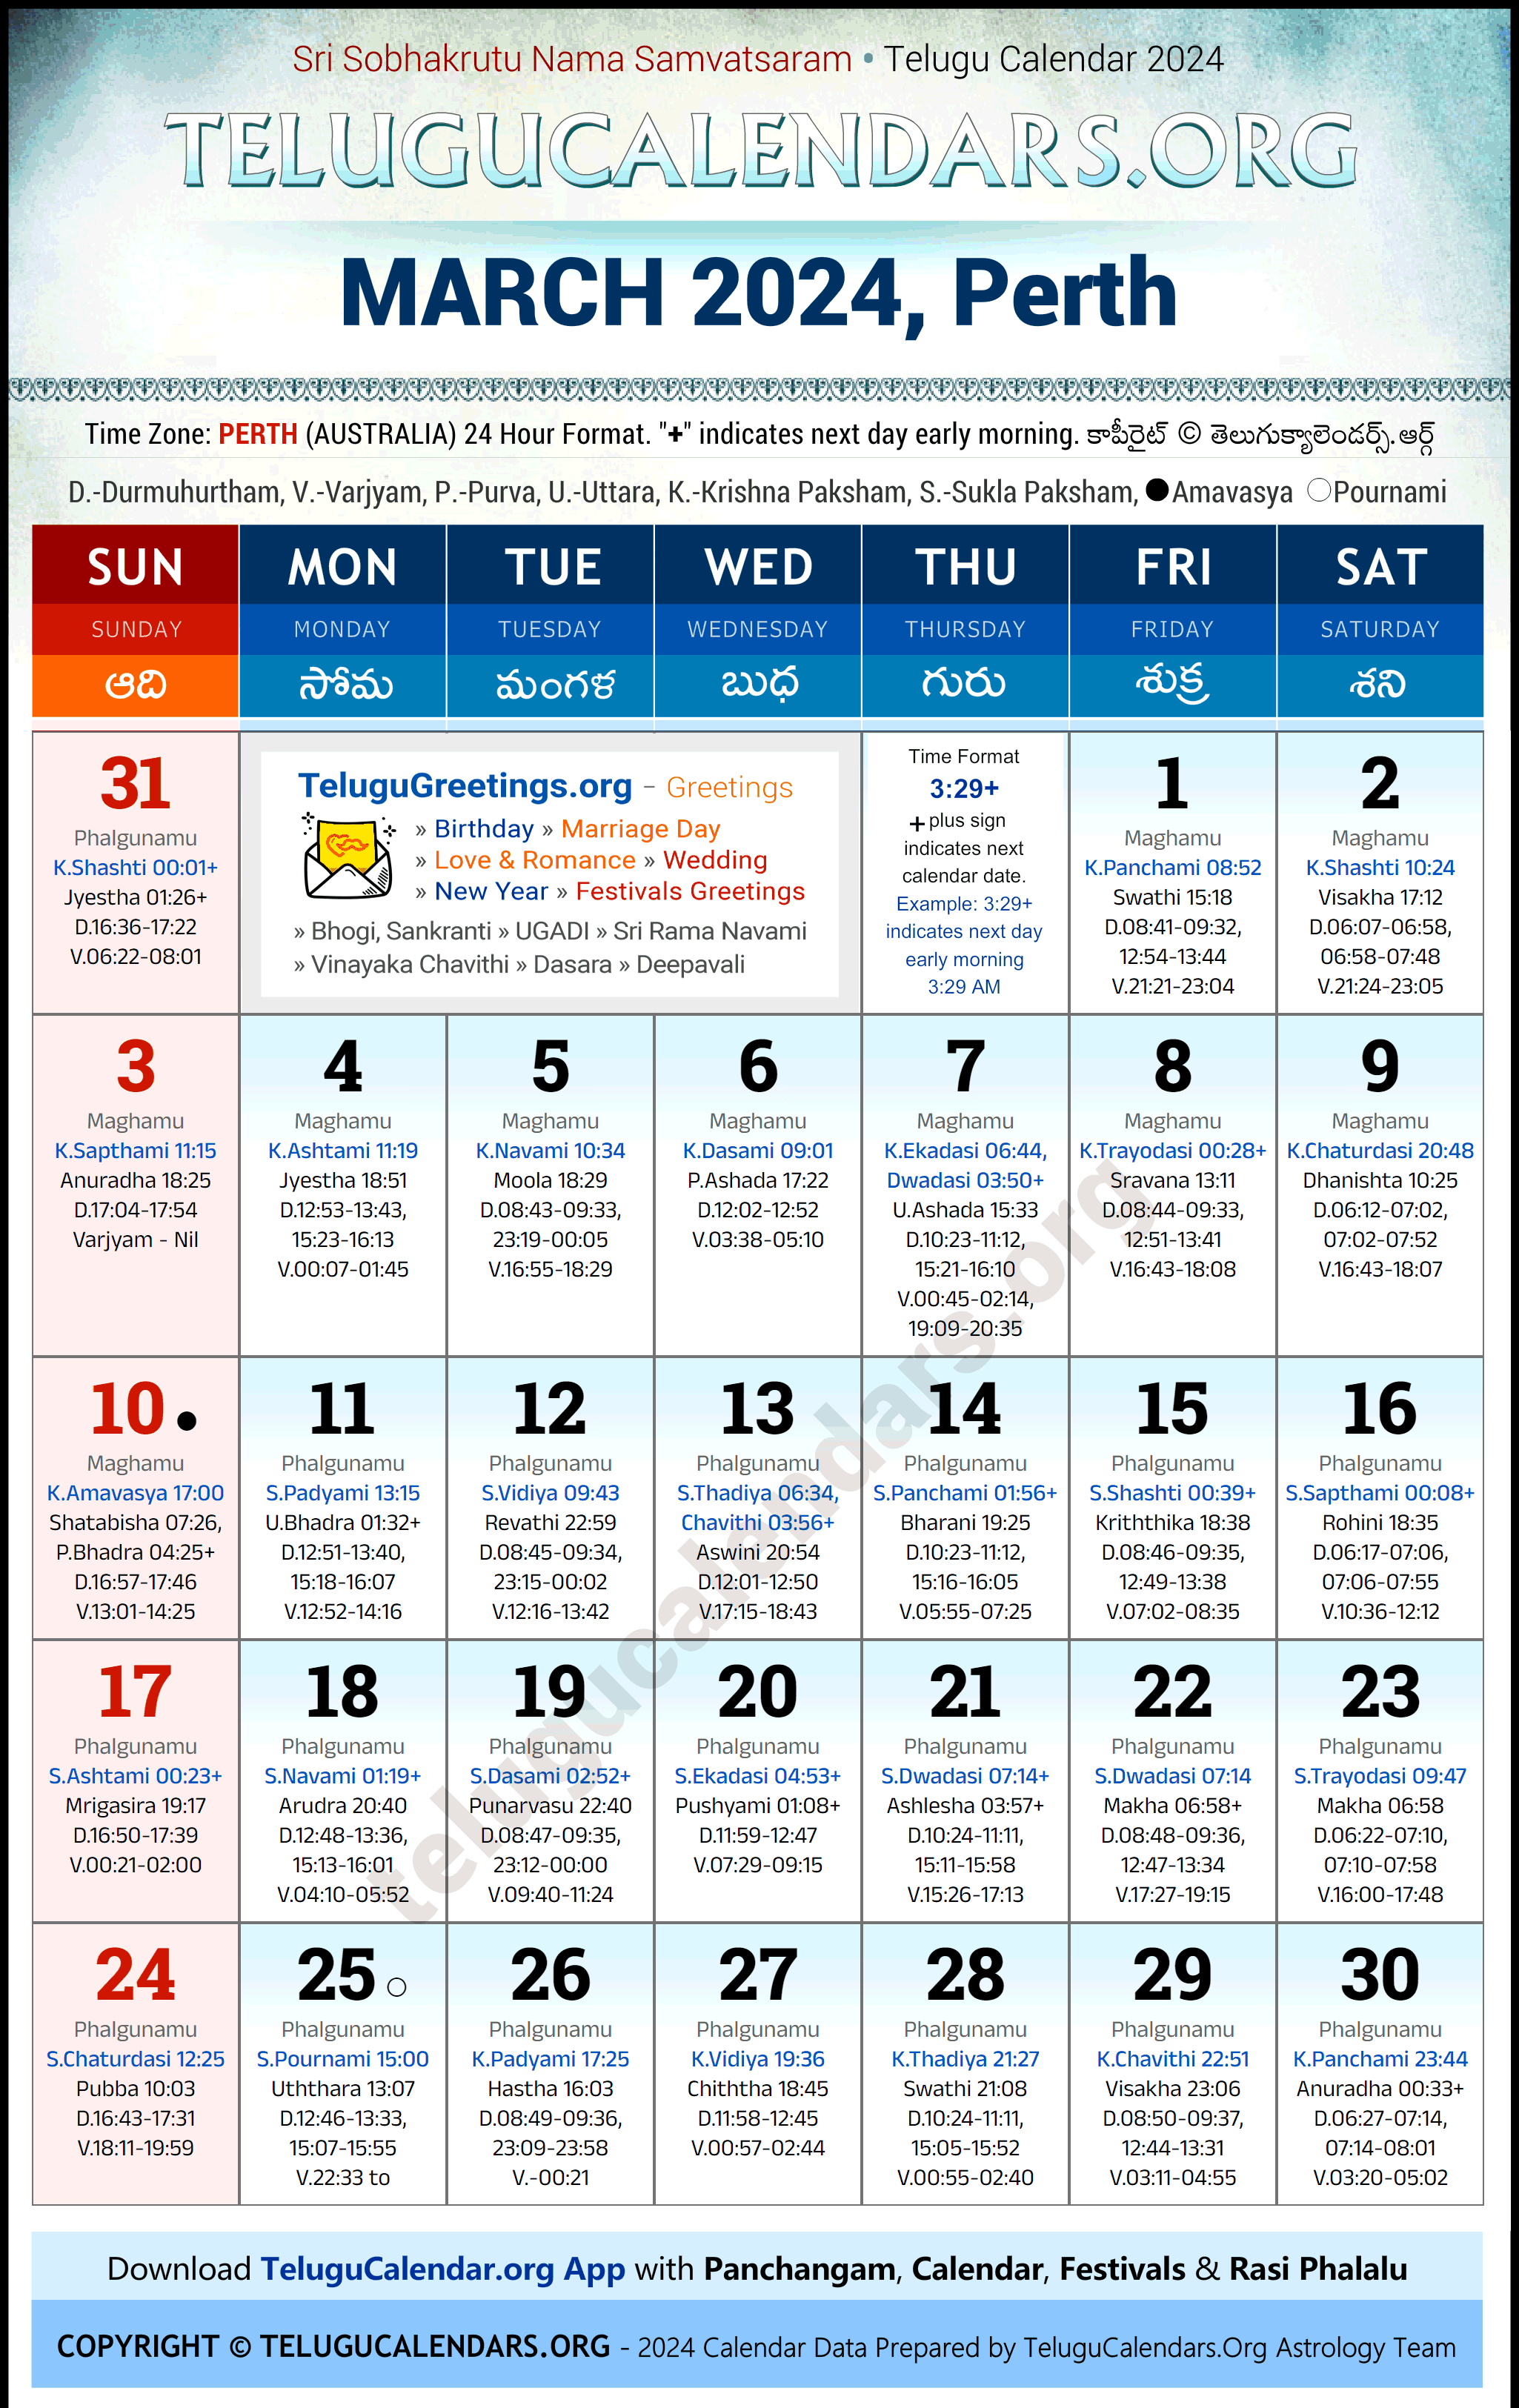 Telugu Calendar 2024 March Festivals for Perth